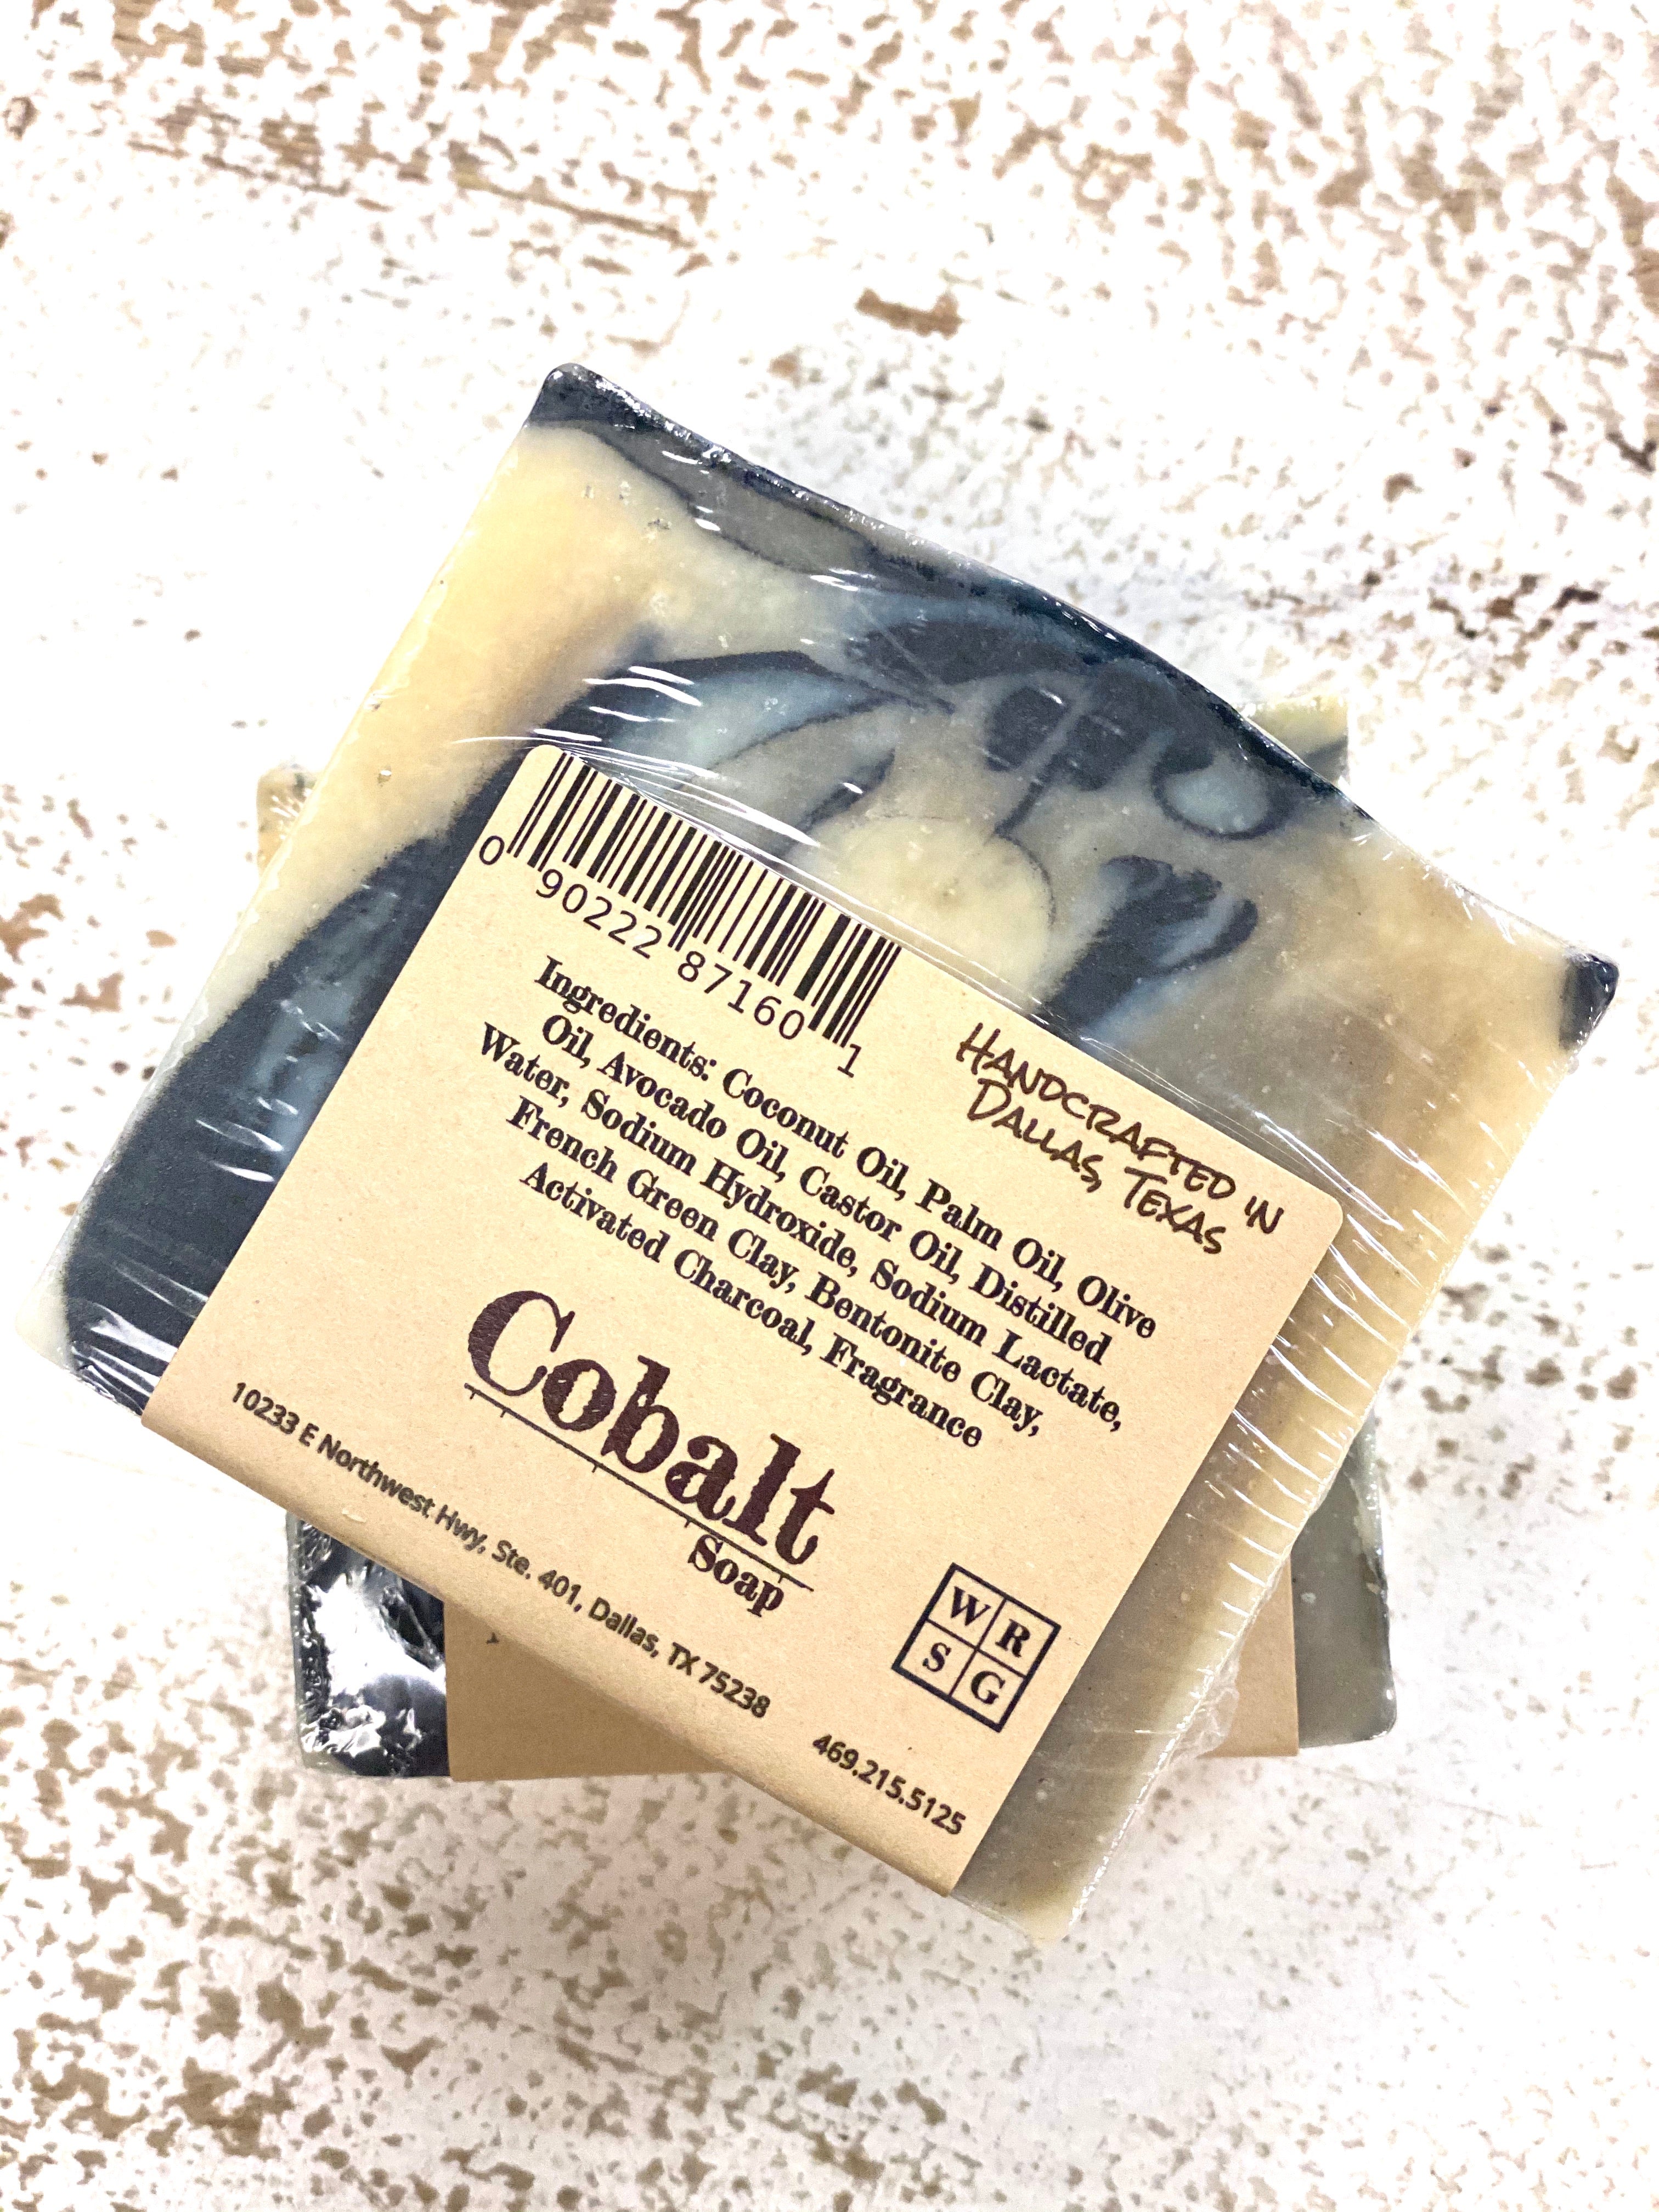 Jabón de cobalto no. 20 - Madera de teca de caoba